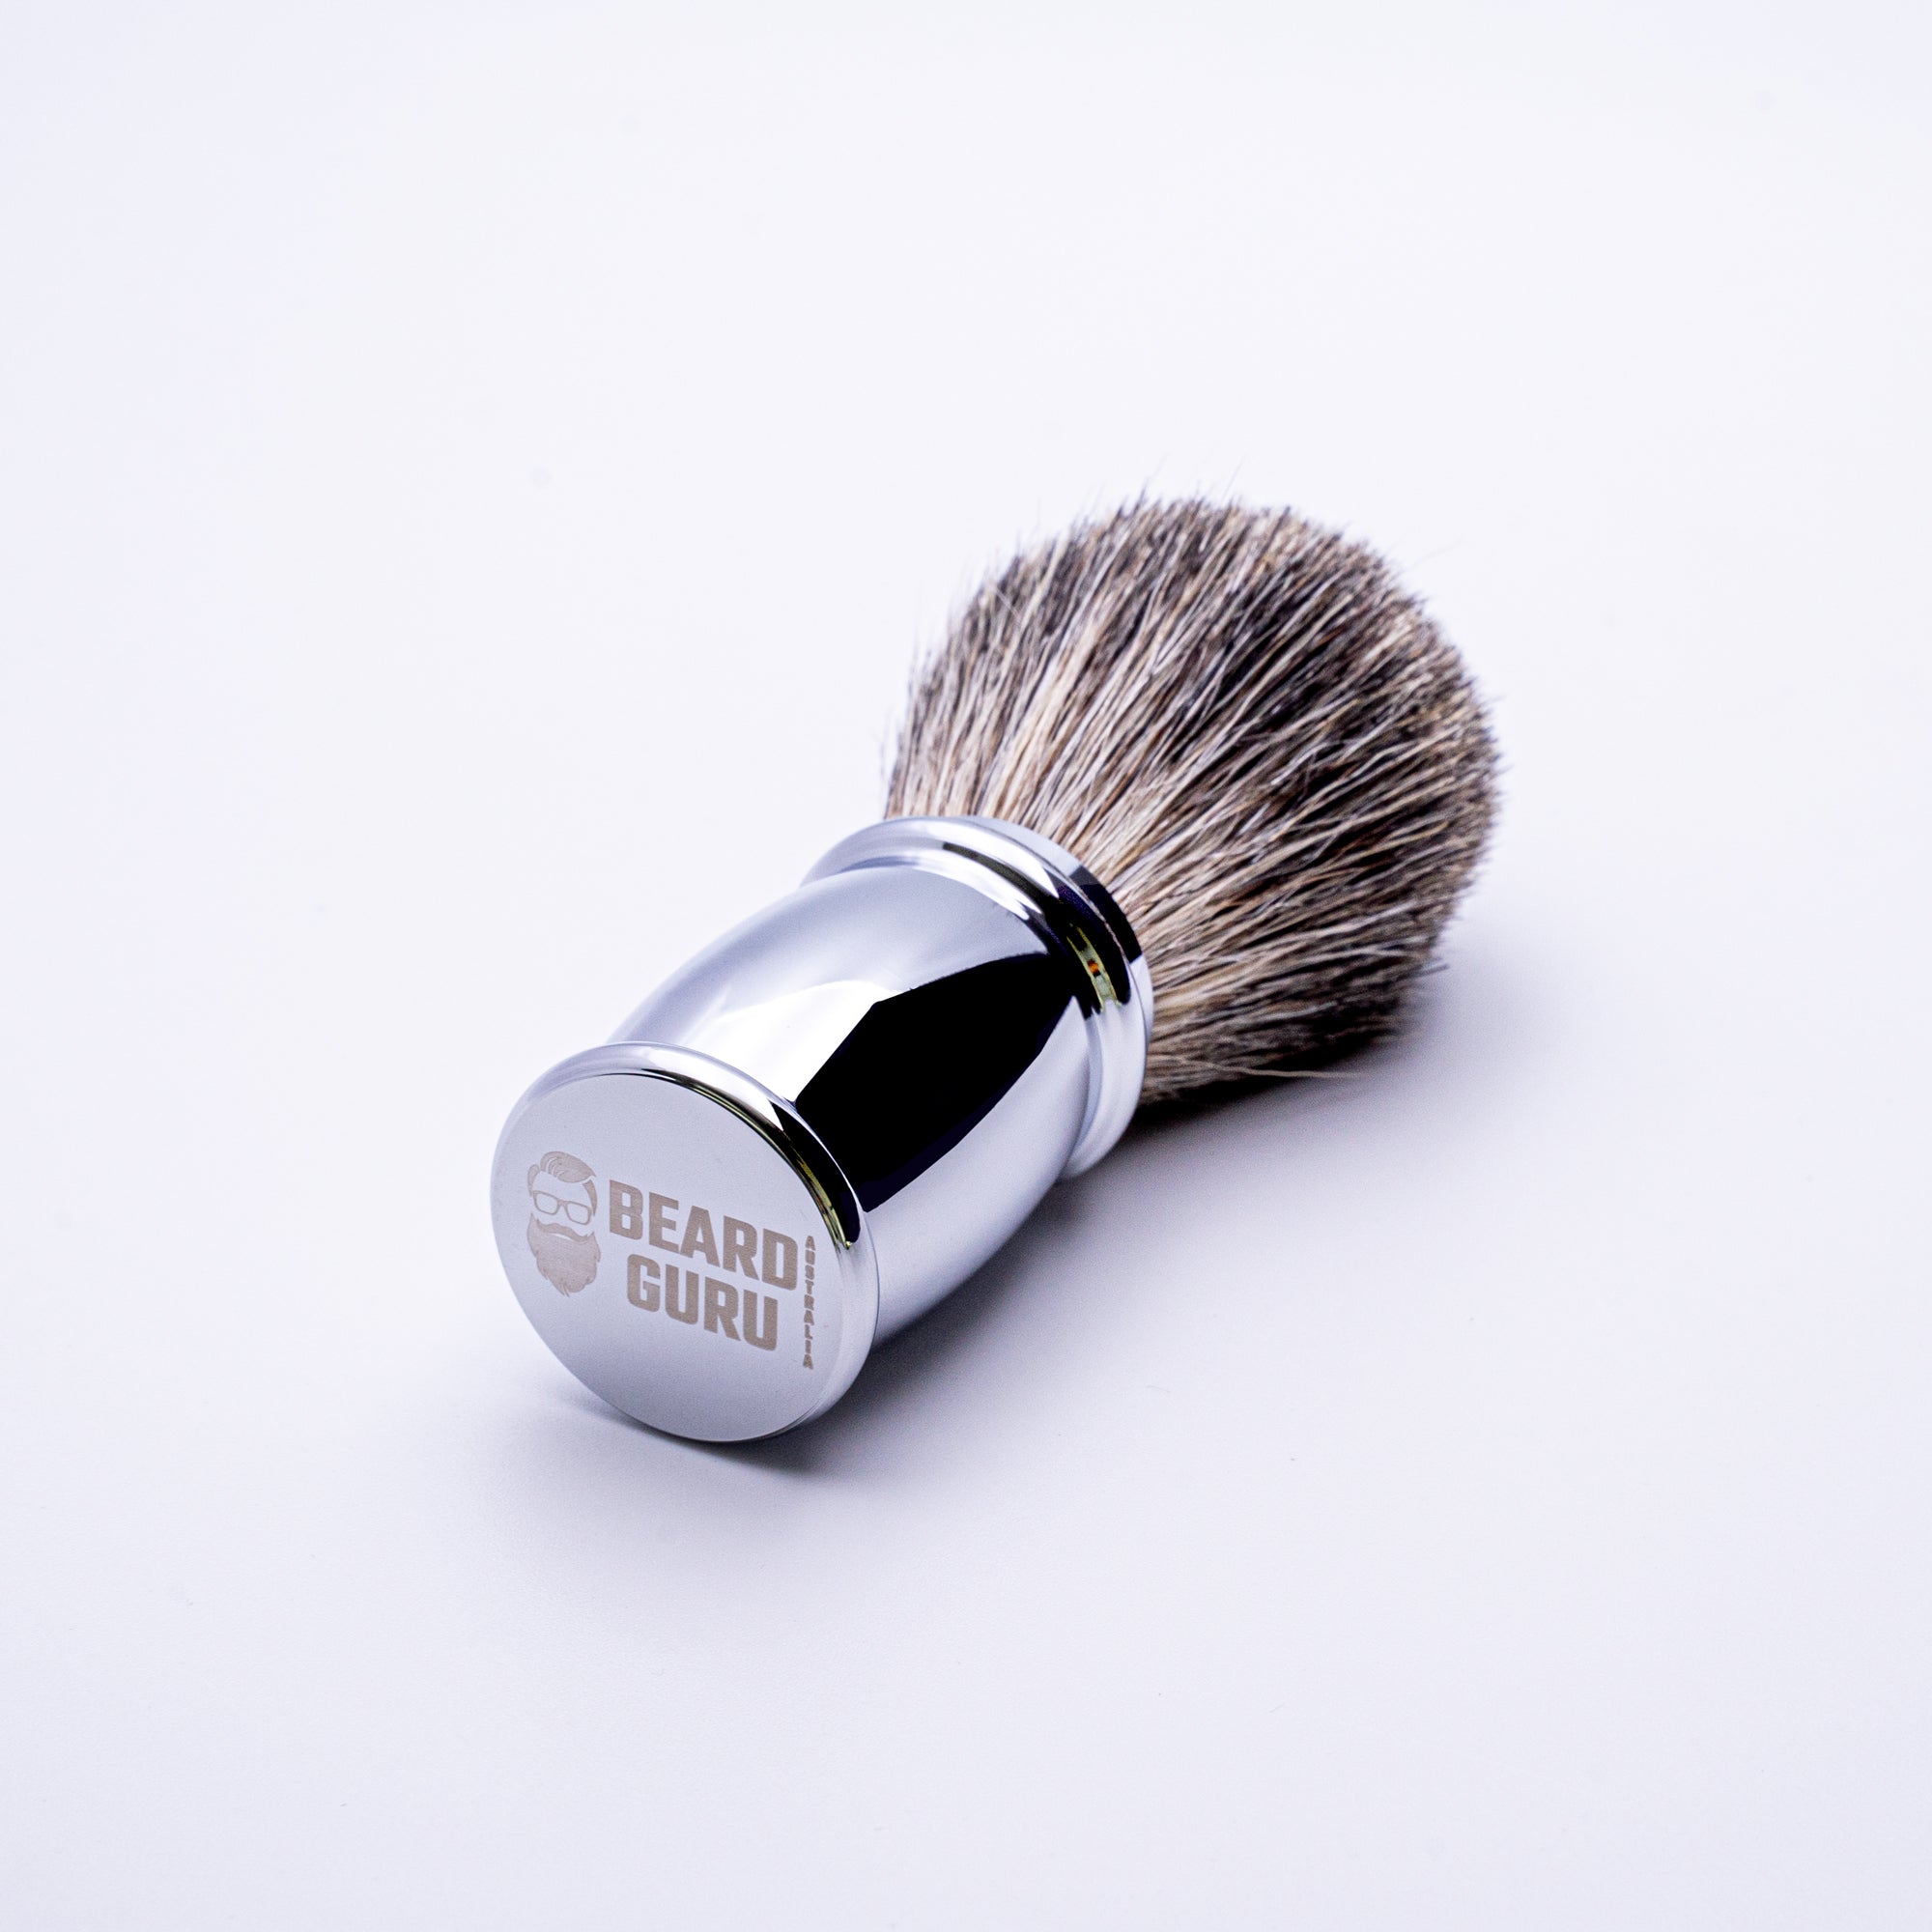 Safety Razor Kit by Beard Guru - Razor, Shaving Brush, Shaving Bowl And Stand